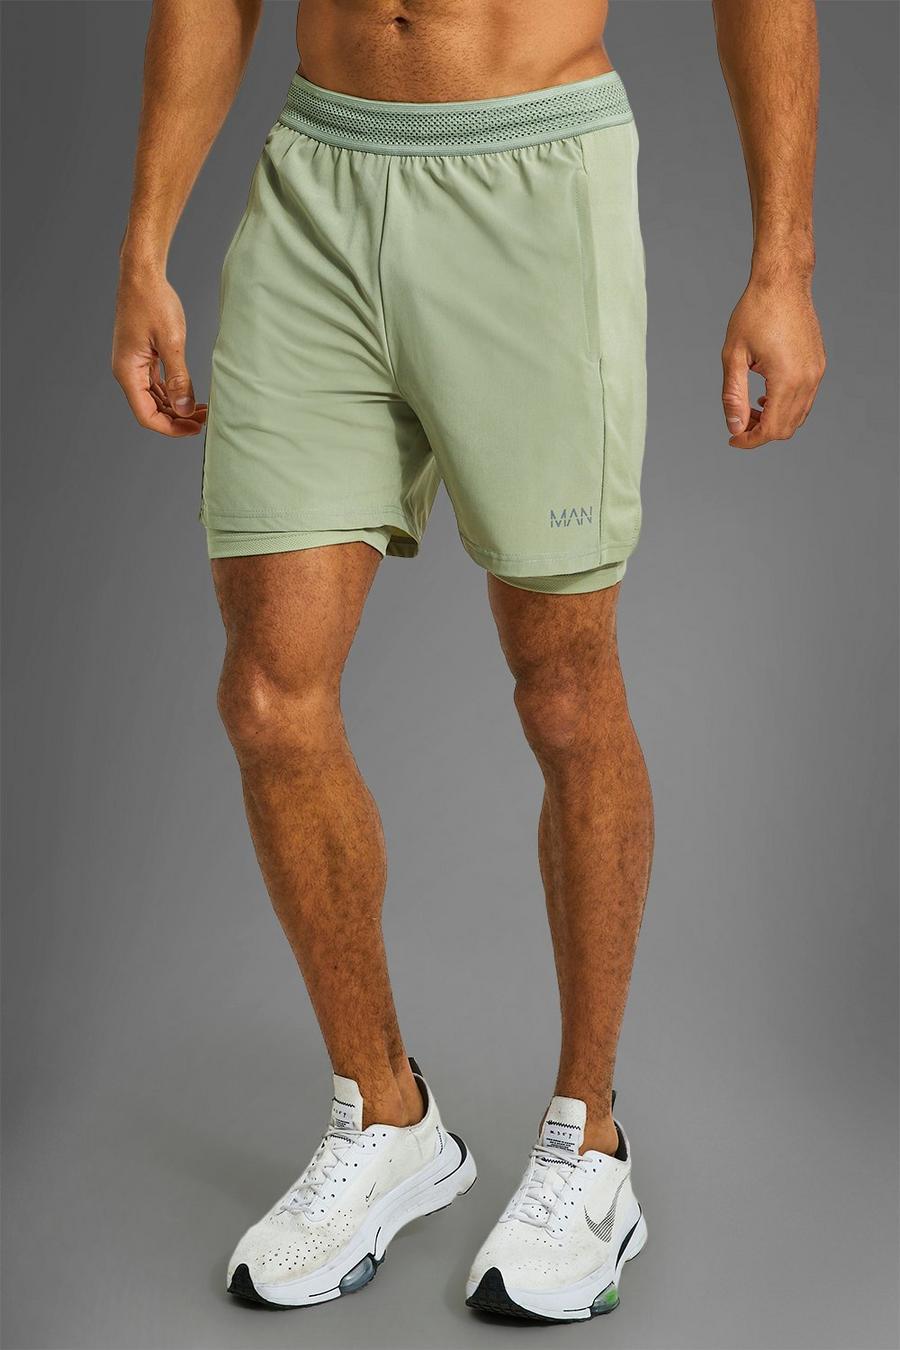 Pantaloncini Man Active Gym per alta performance 2 in 1, Olive gerde image number 1